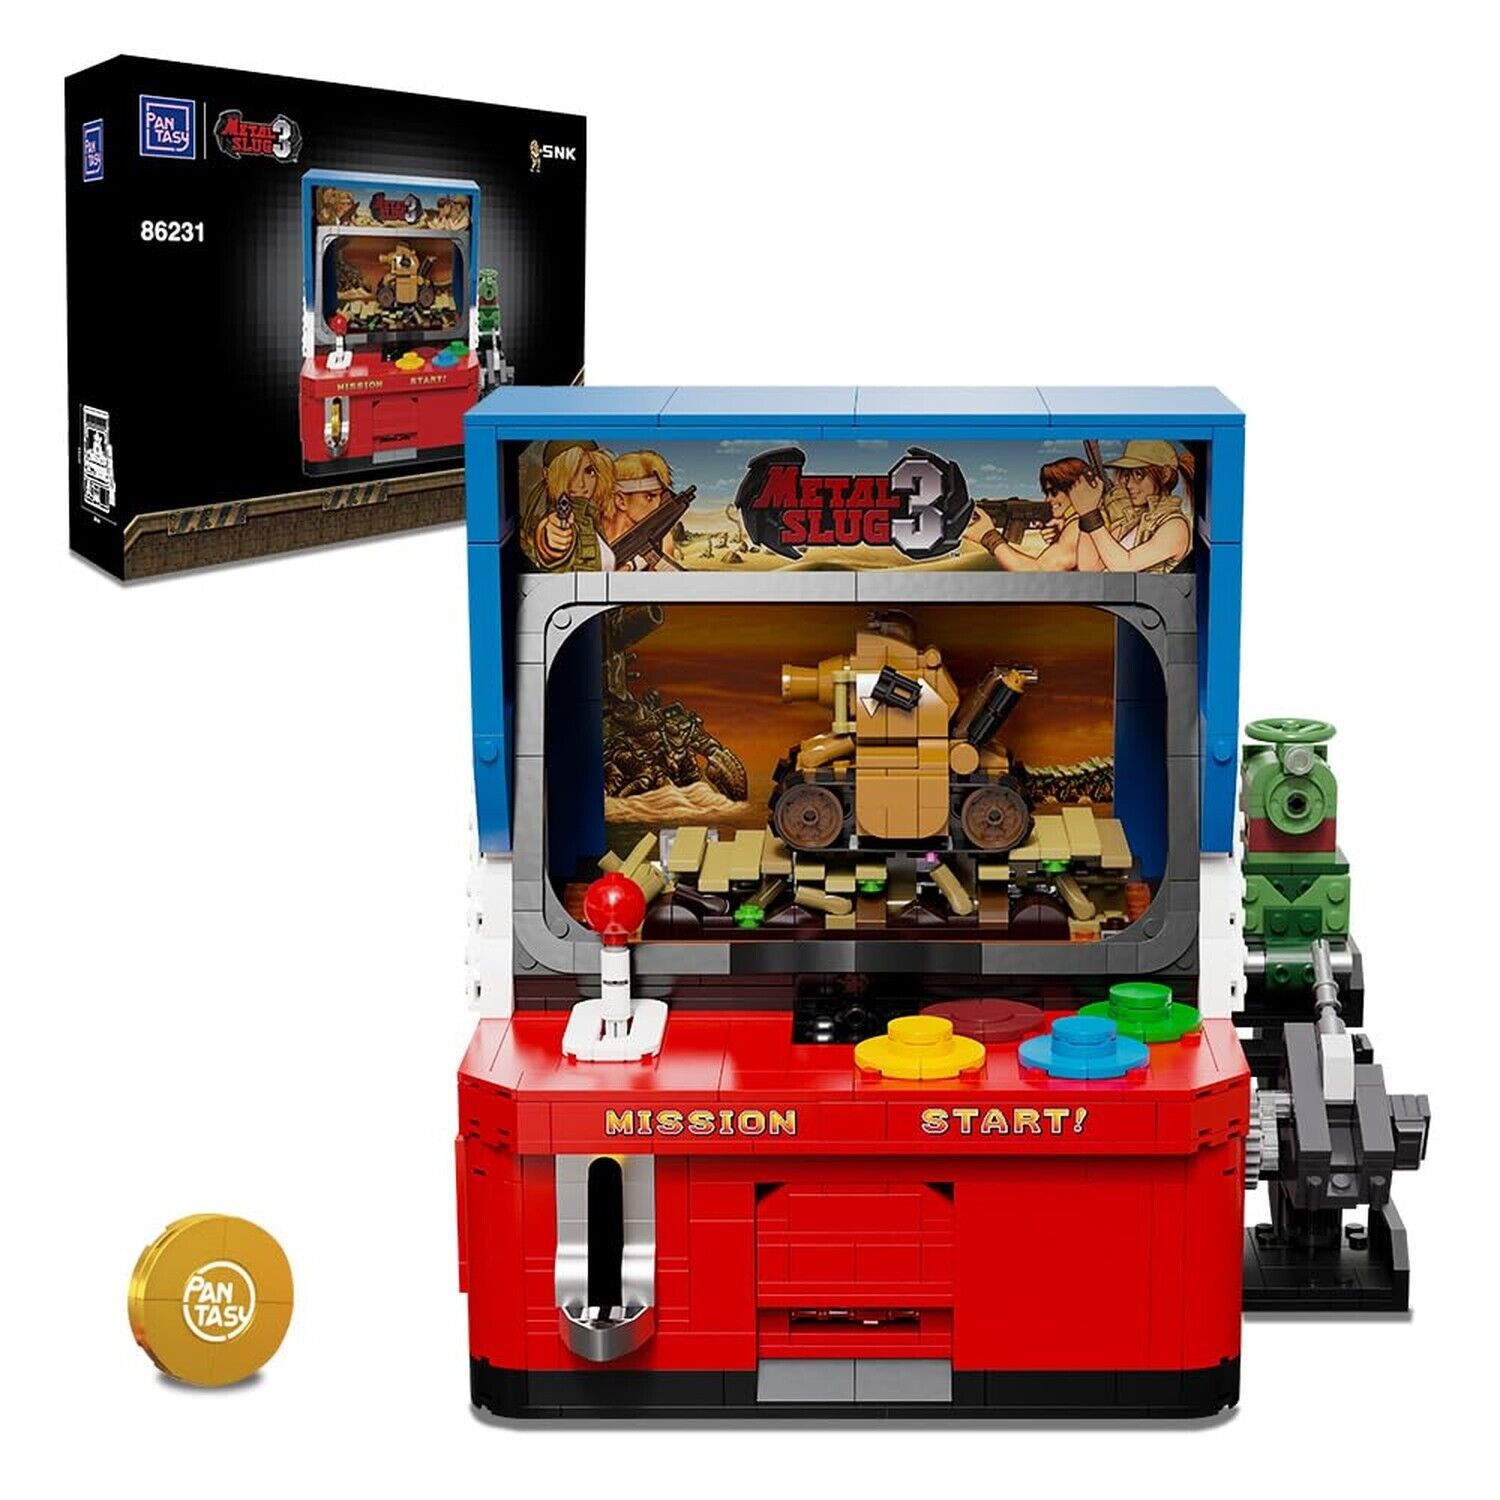 PANTASY Arcade Game Building Set, Metal Slug Arcade Machine Building Kit, Cab...